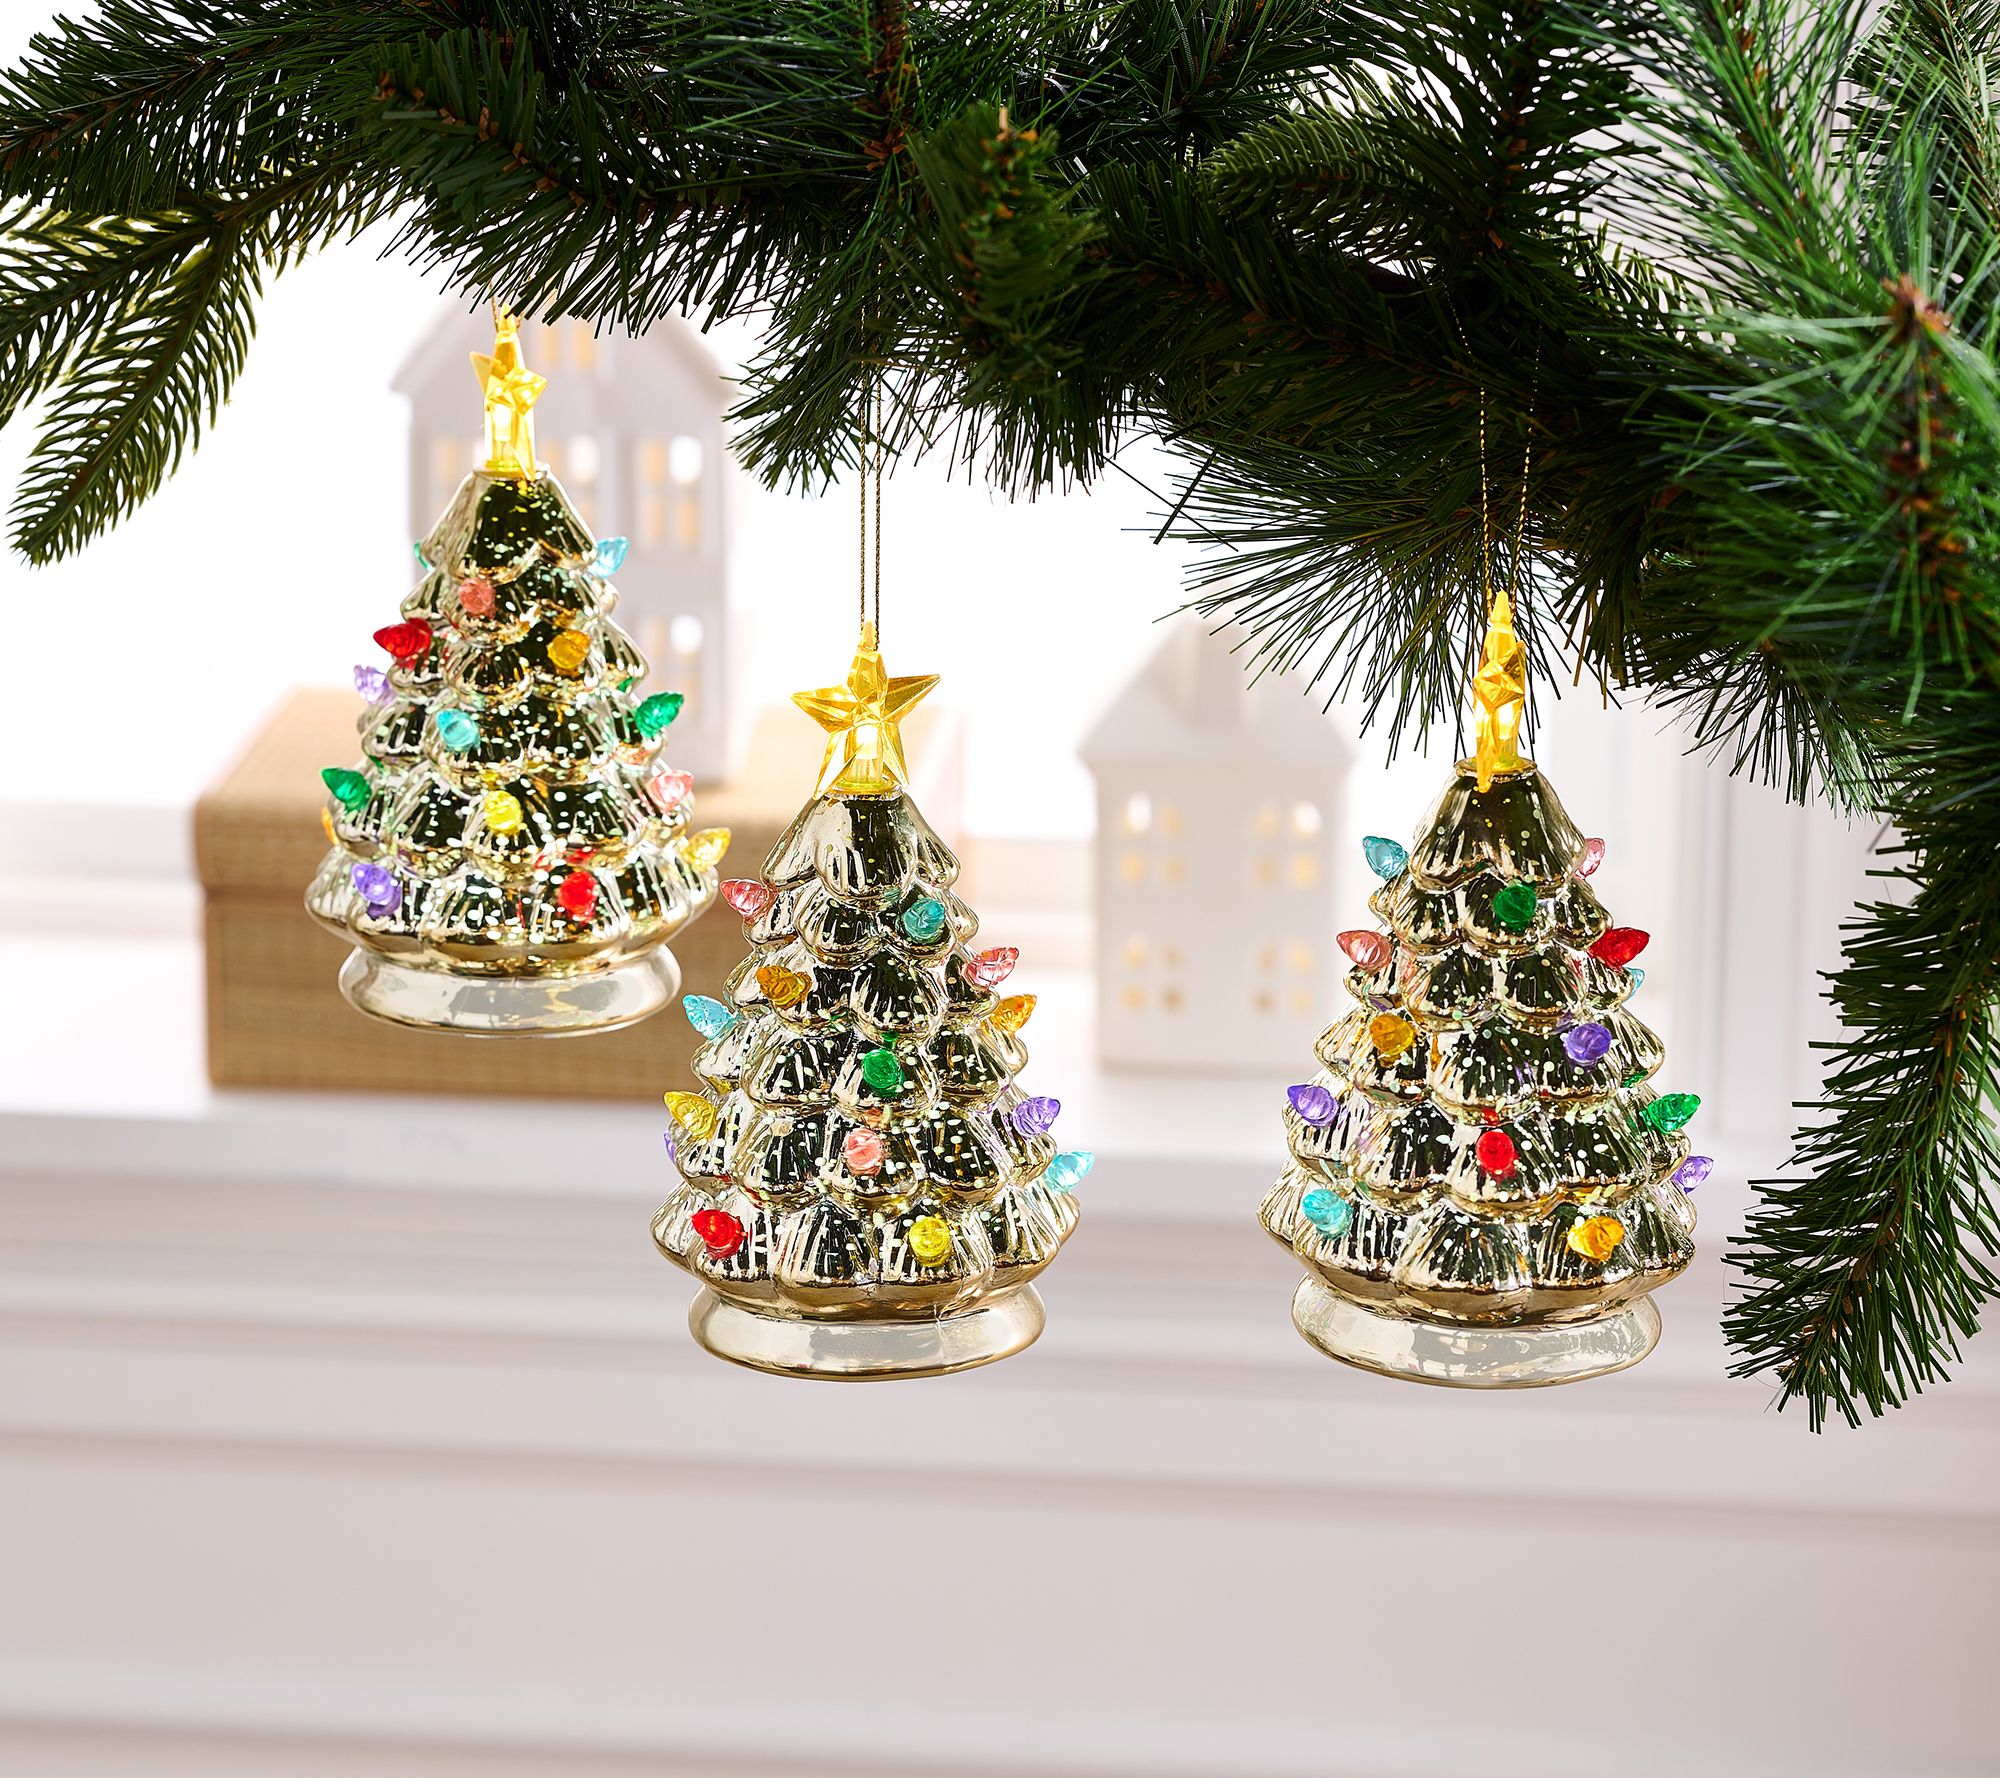 Mr. Christmas Set of Glass Nostalgic Christmas Trees